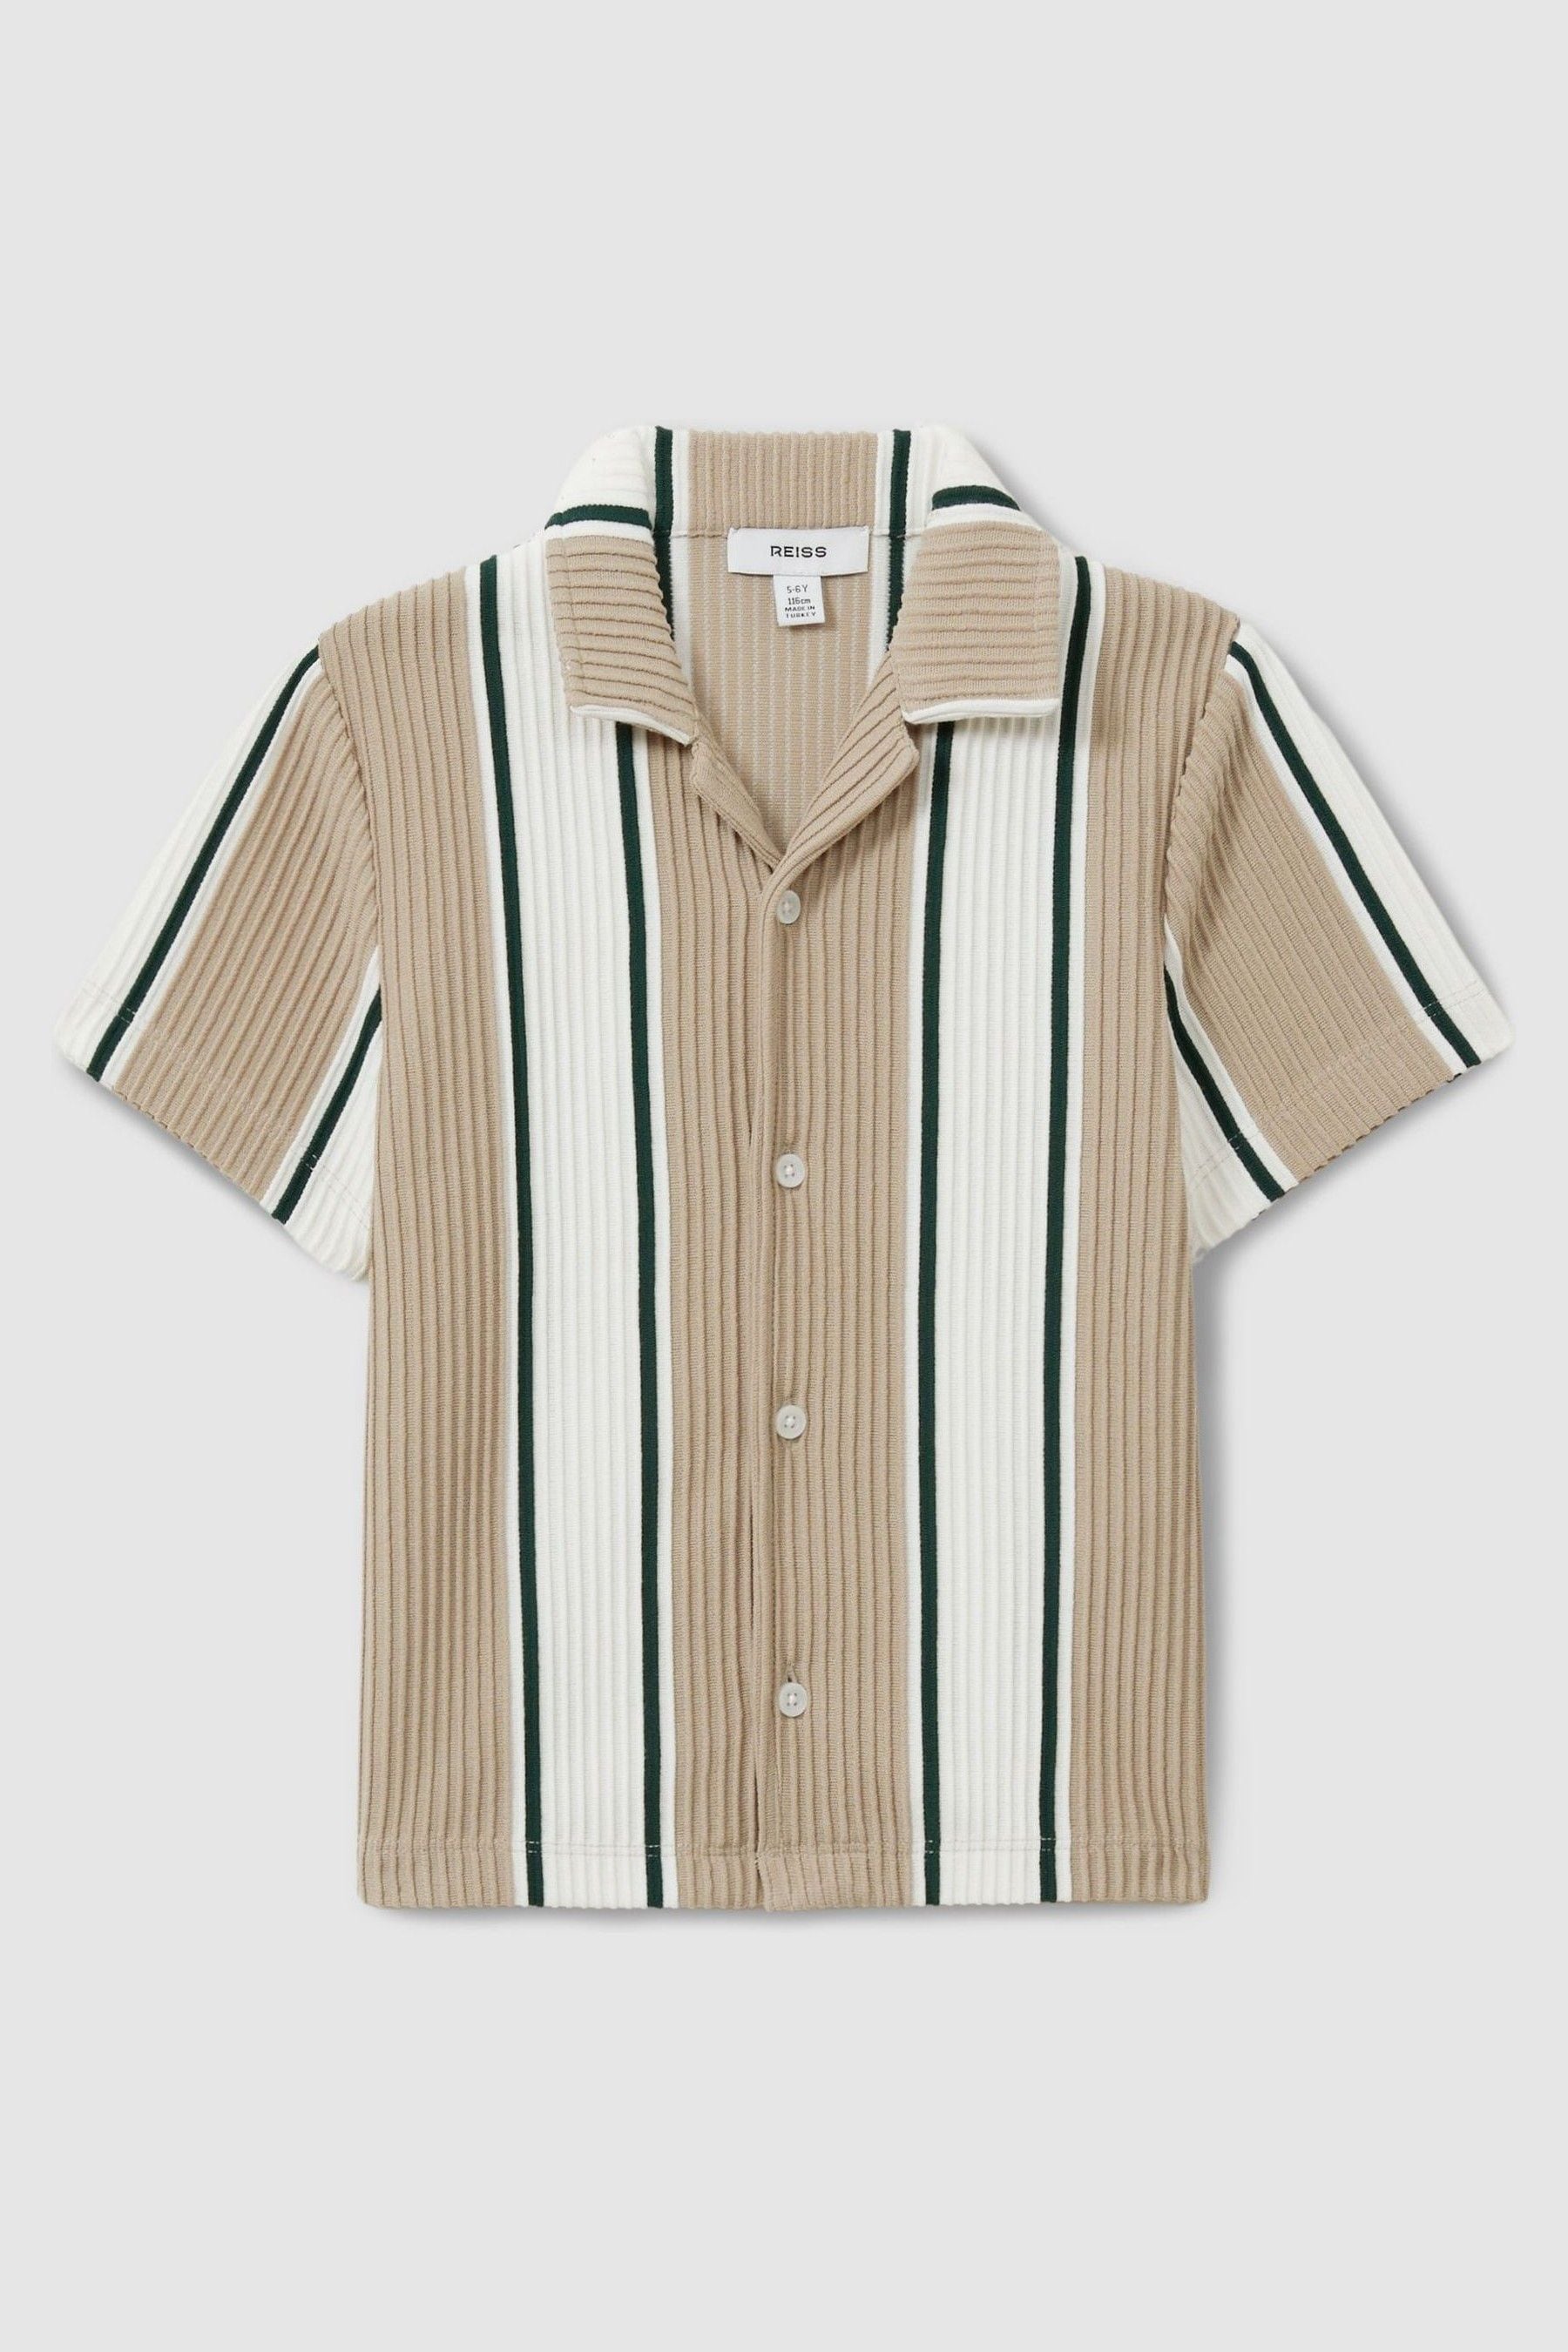 Alton - Camel/Off White/ Forest Green Teen Ribbed Cuban Collar Shirt,